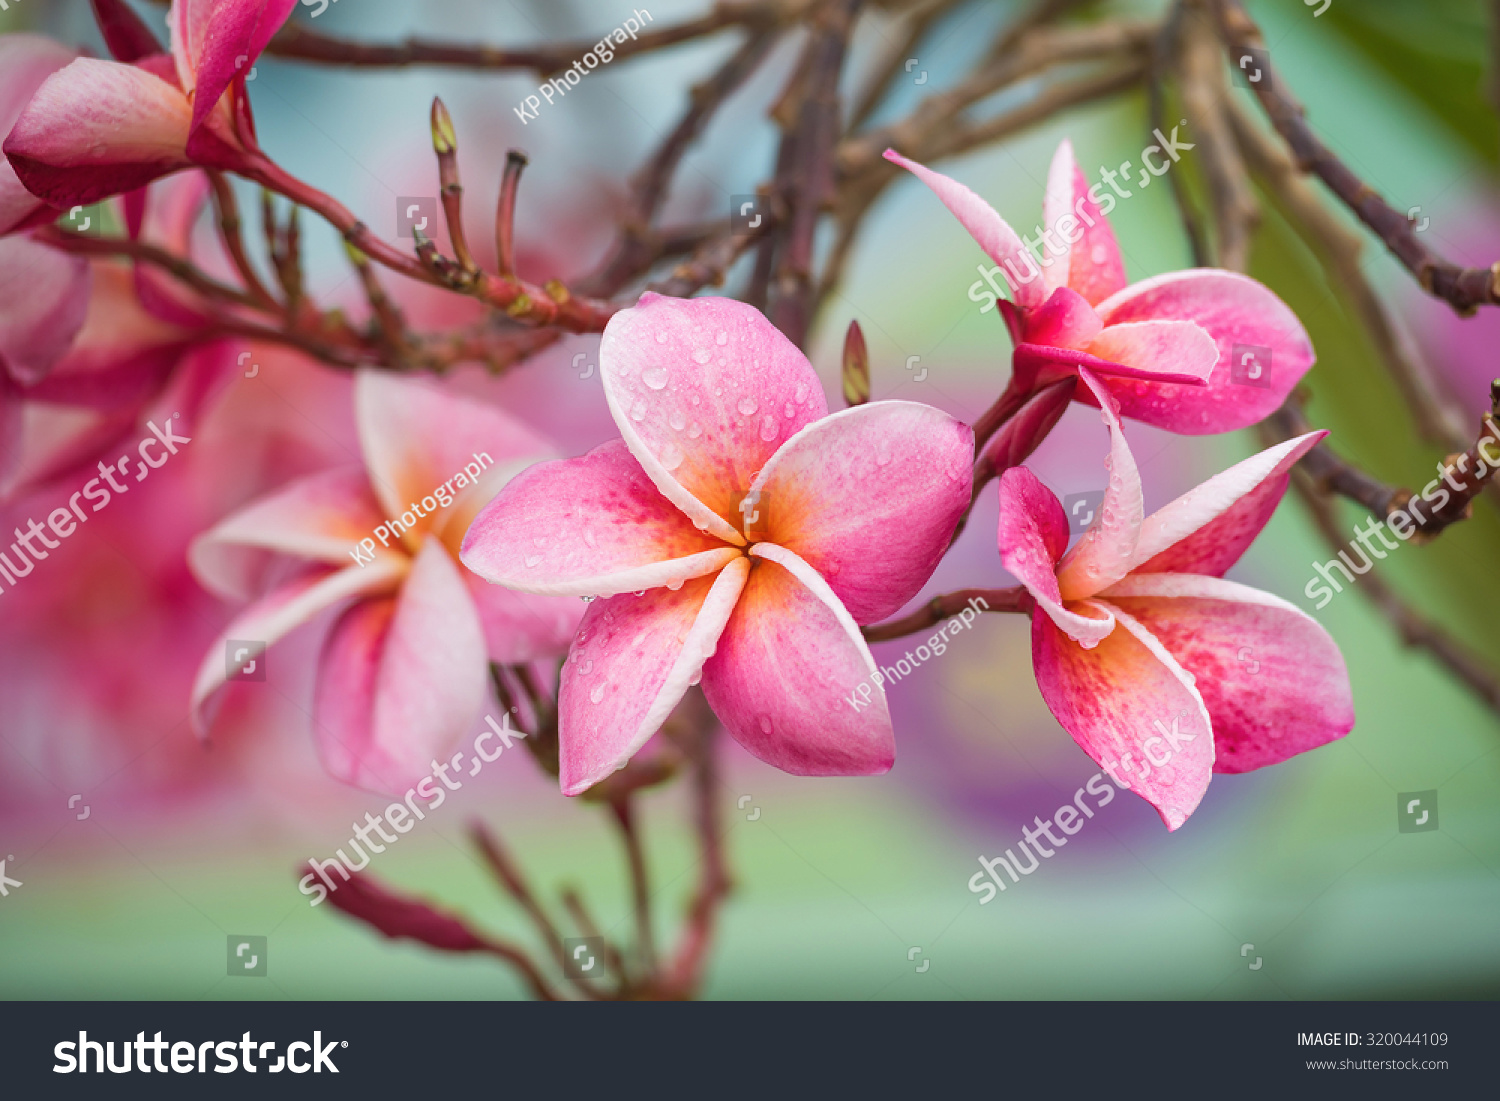 Beautiful flowers Images, Stock Photos & Vectors   Shutterstock